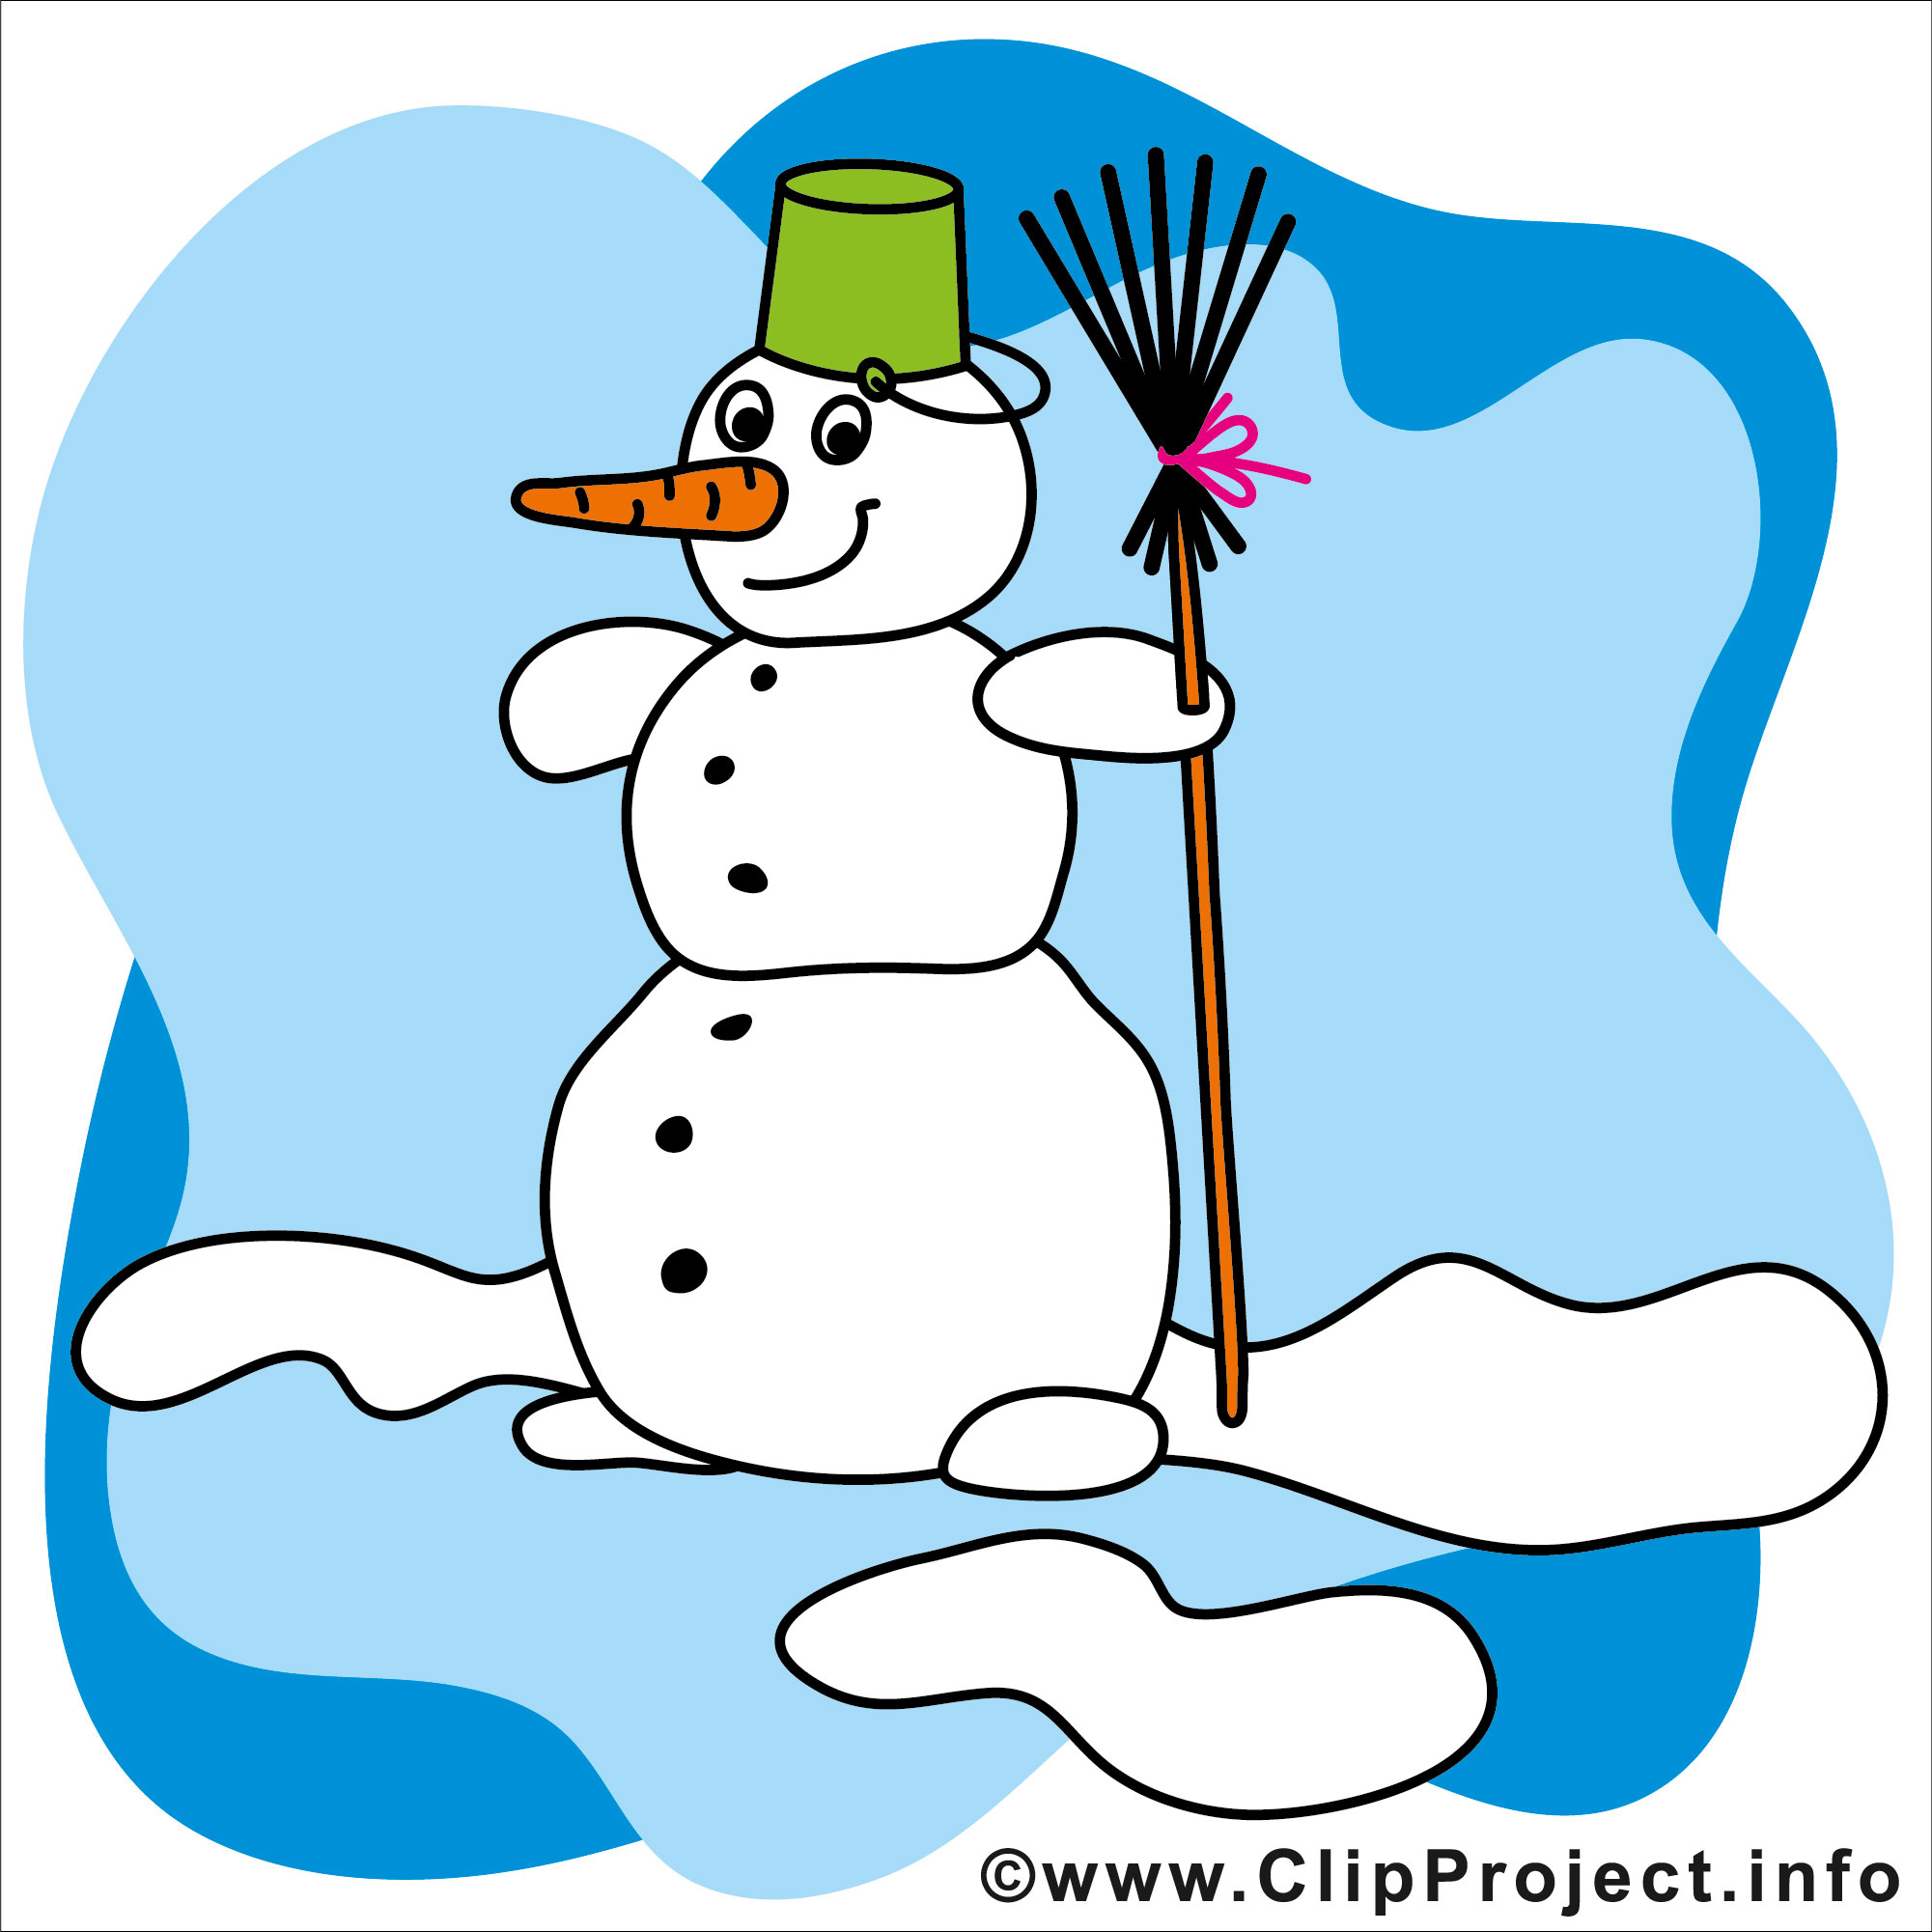 Disney winter season clip art images galore - Clipartix